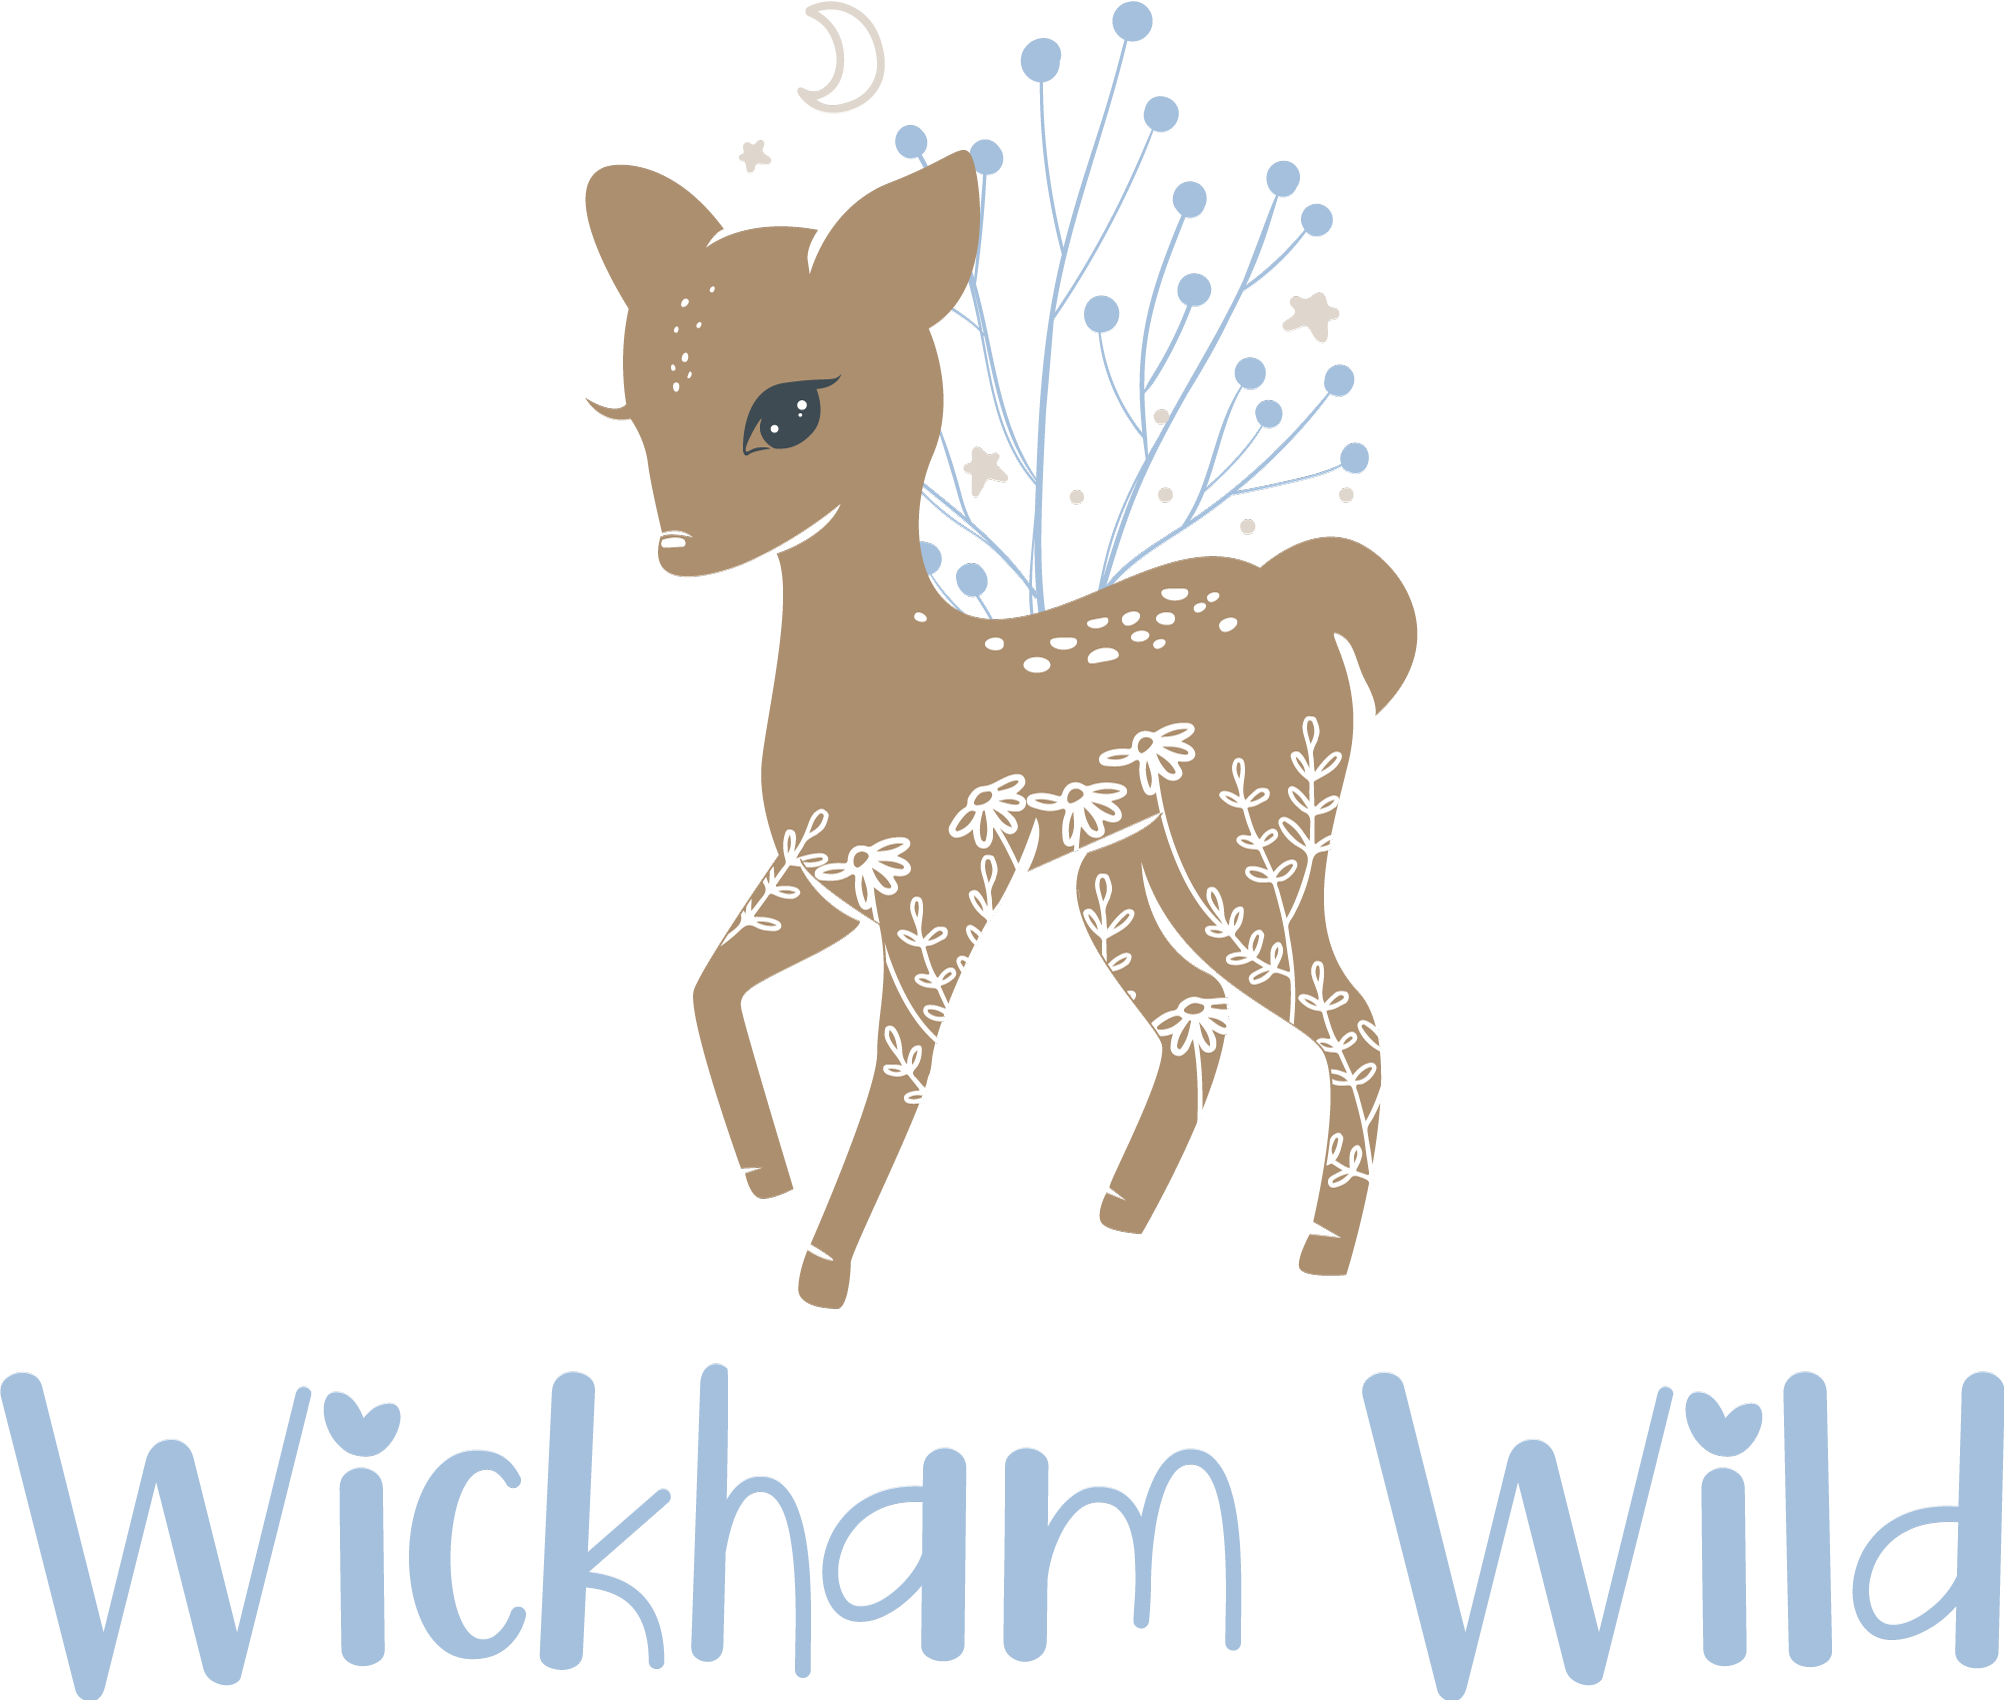 Wickham Wild